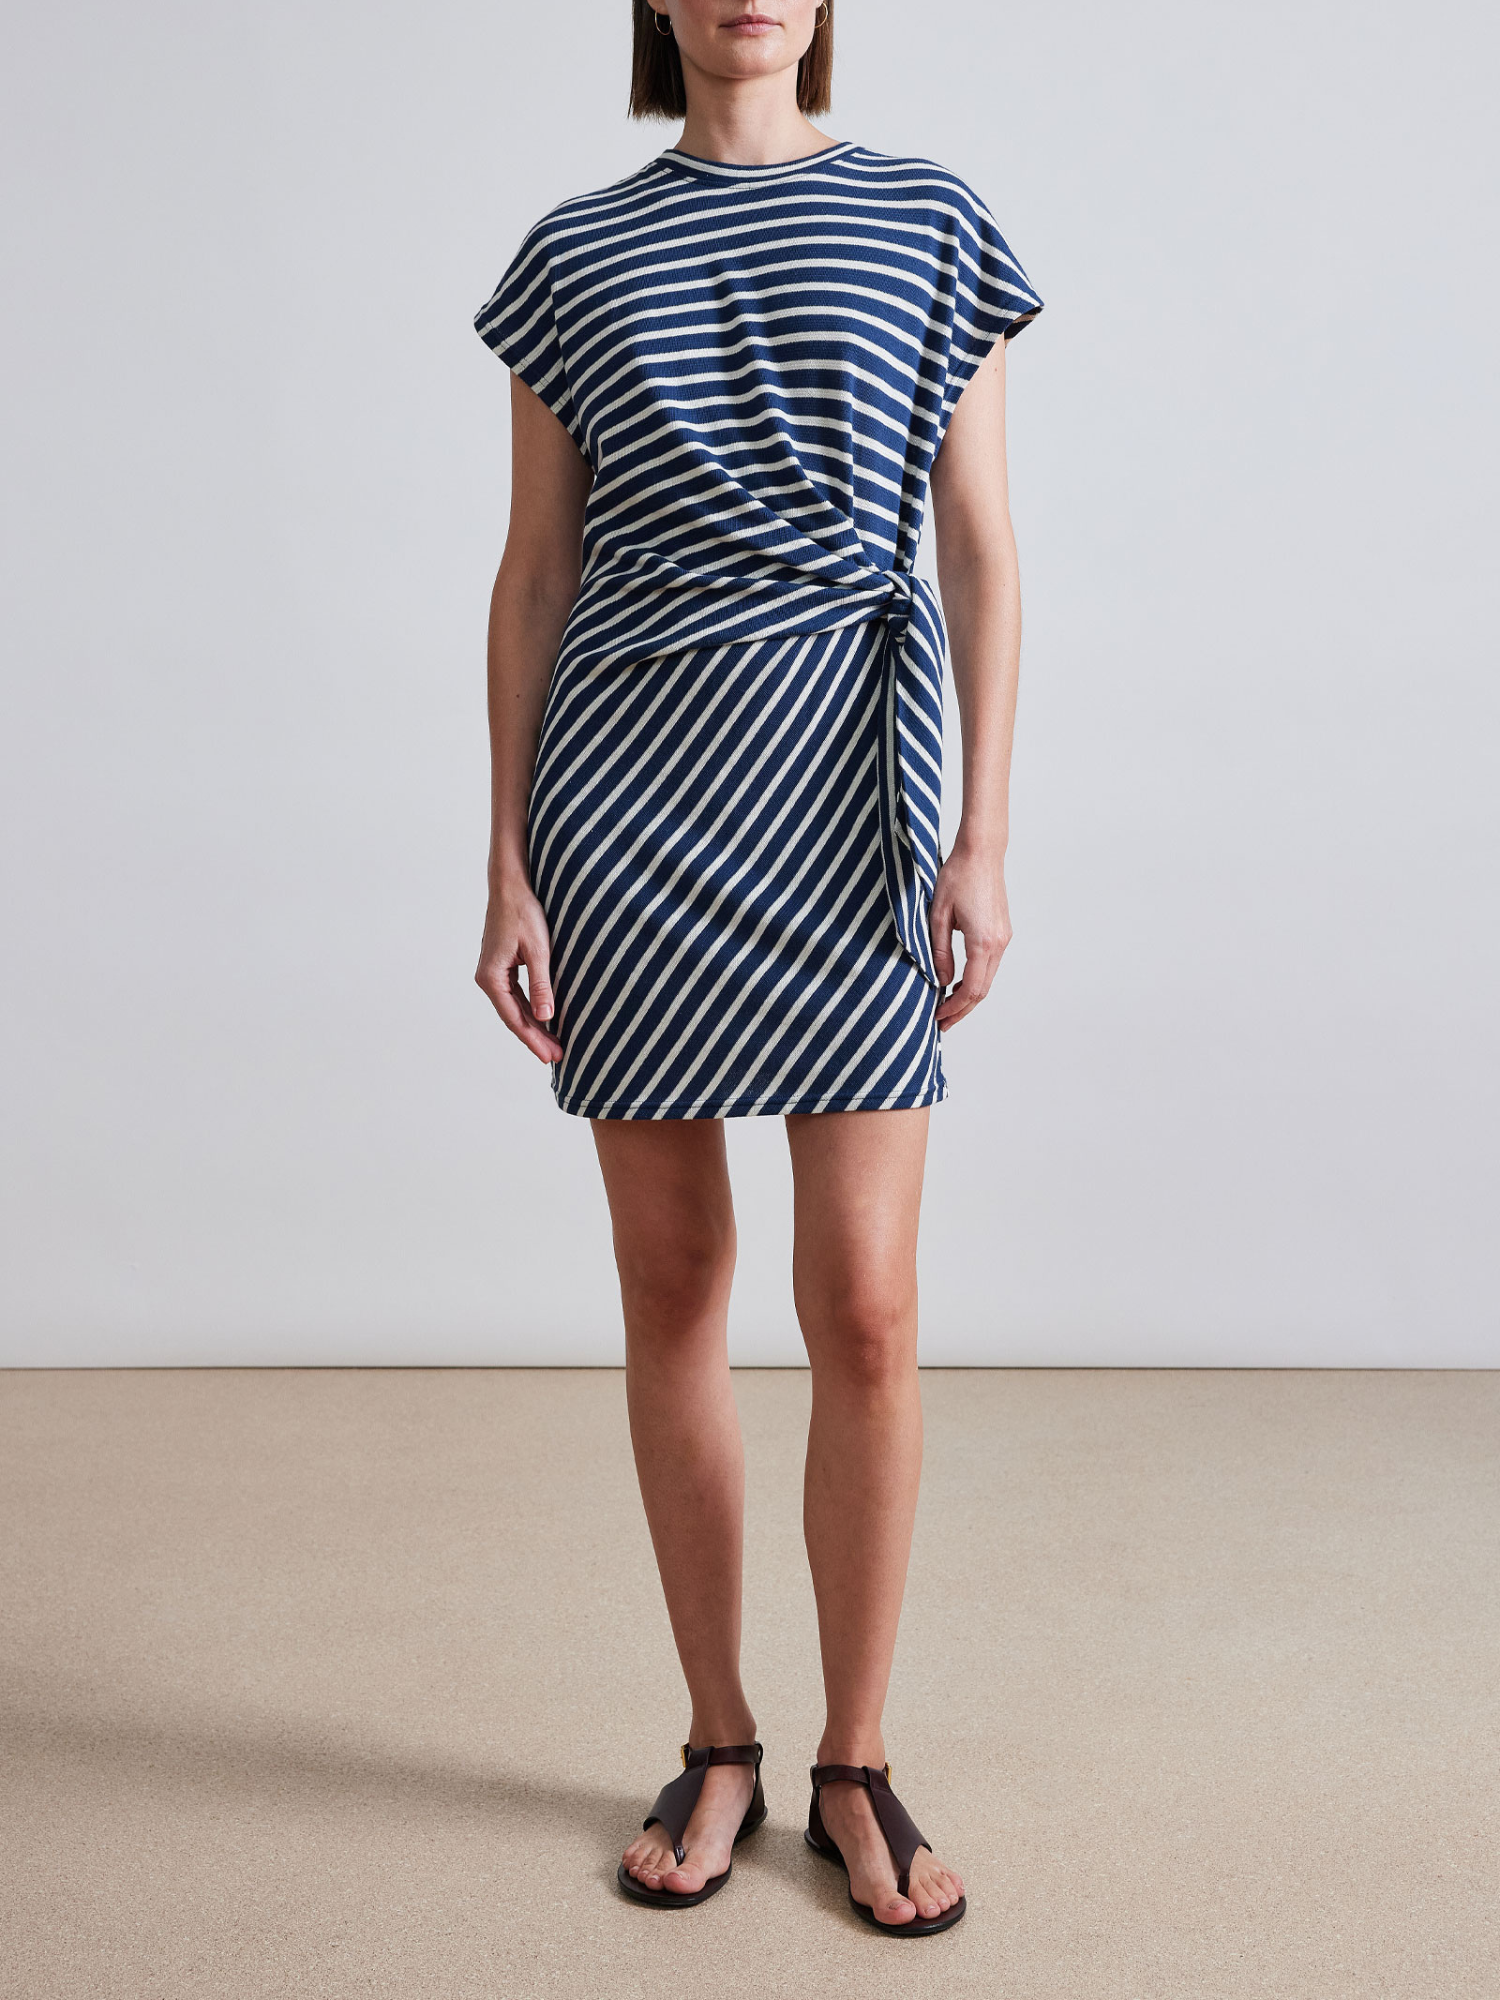 Apiece Apart Nina Cinched Mini Dress in Navy Cream Stripe